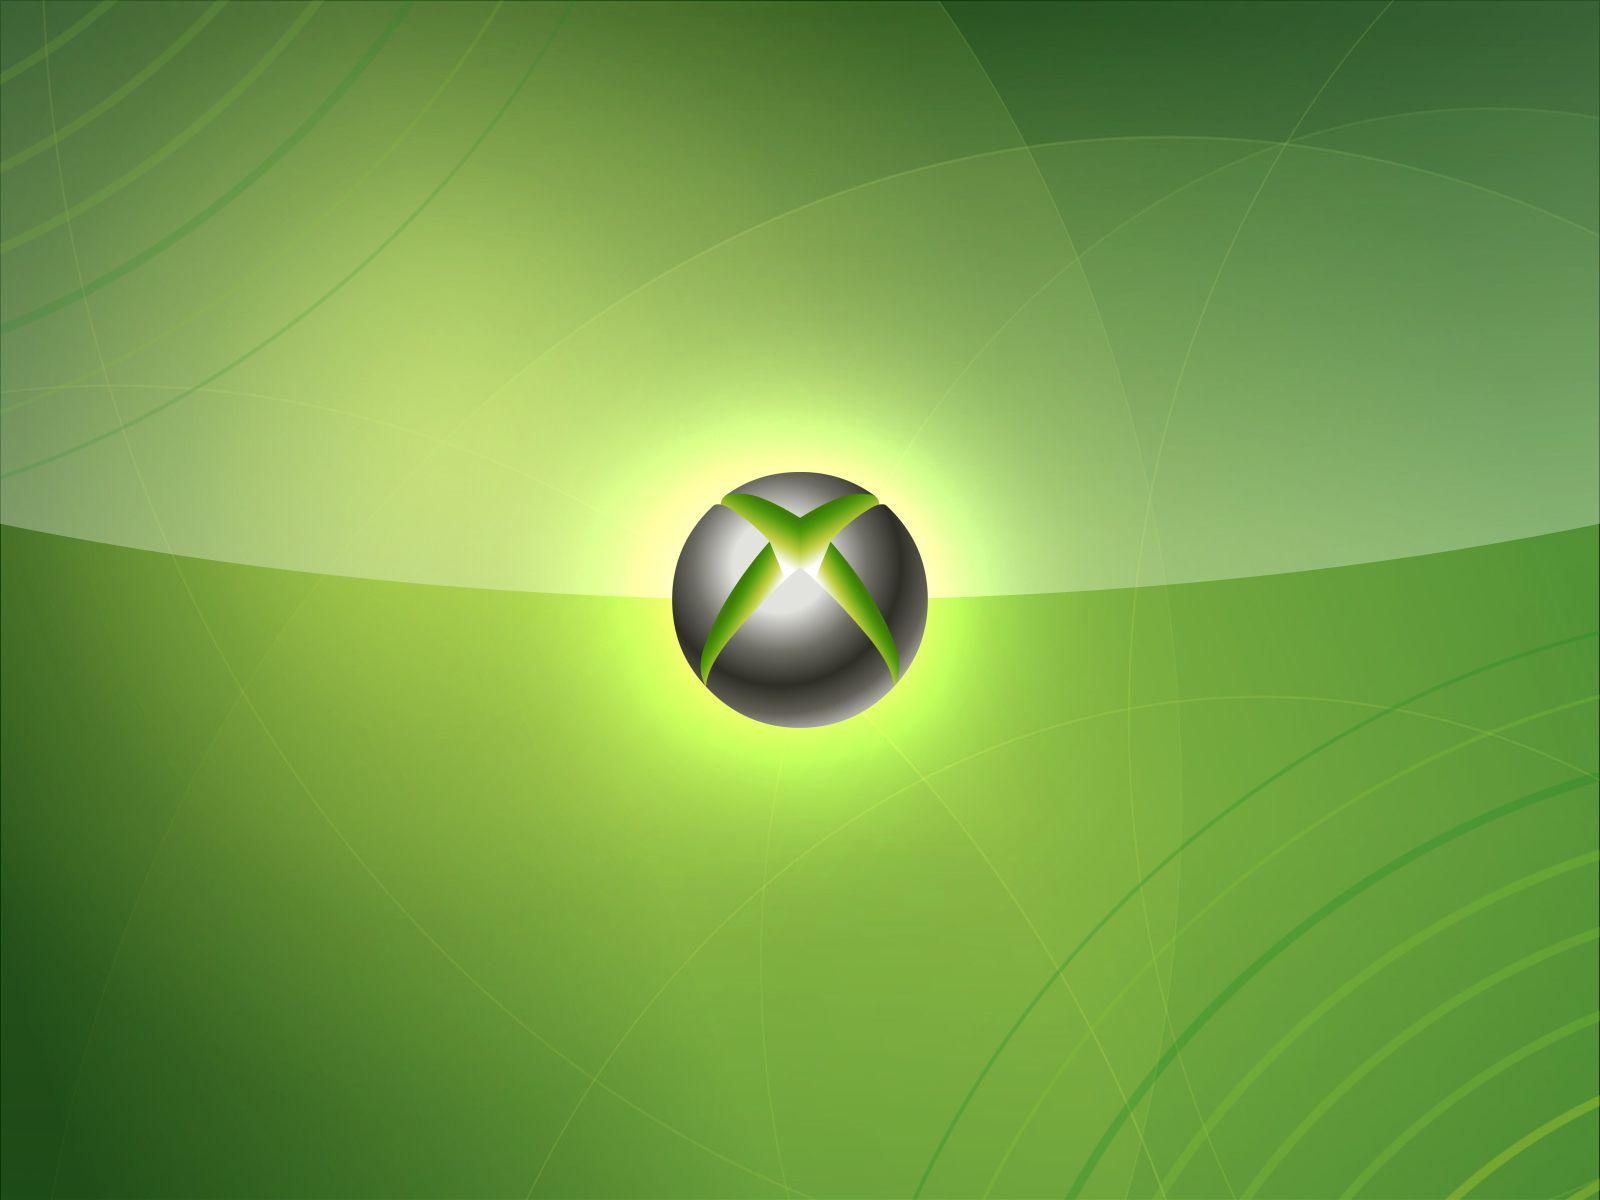 Wallpaper Box: Xbox360 Green And Black HD Wallpaper